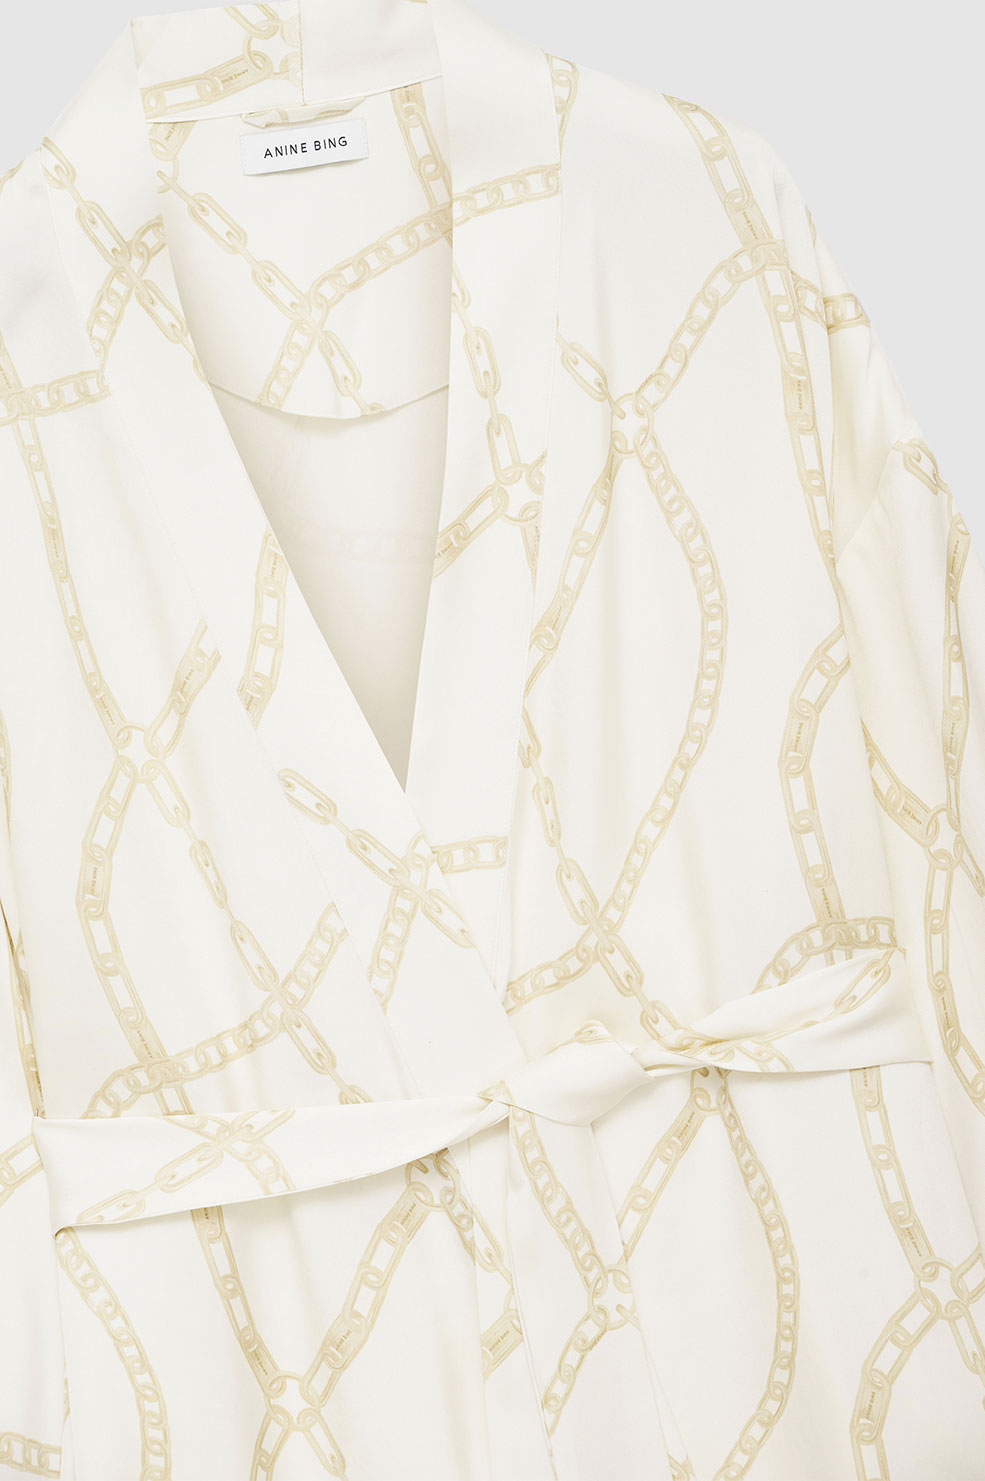 ANINE BING Kara Robe - Cream And Tan Link Print - Detail View